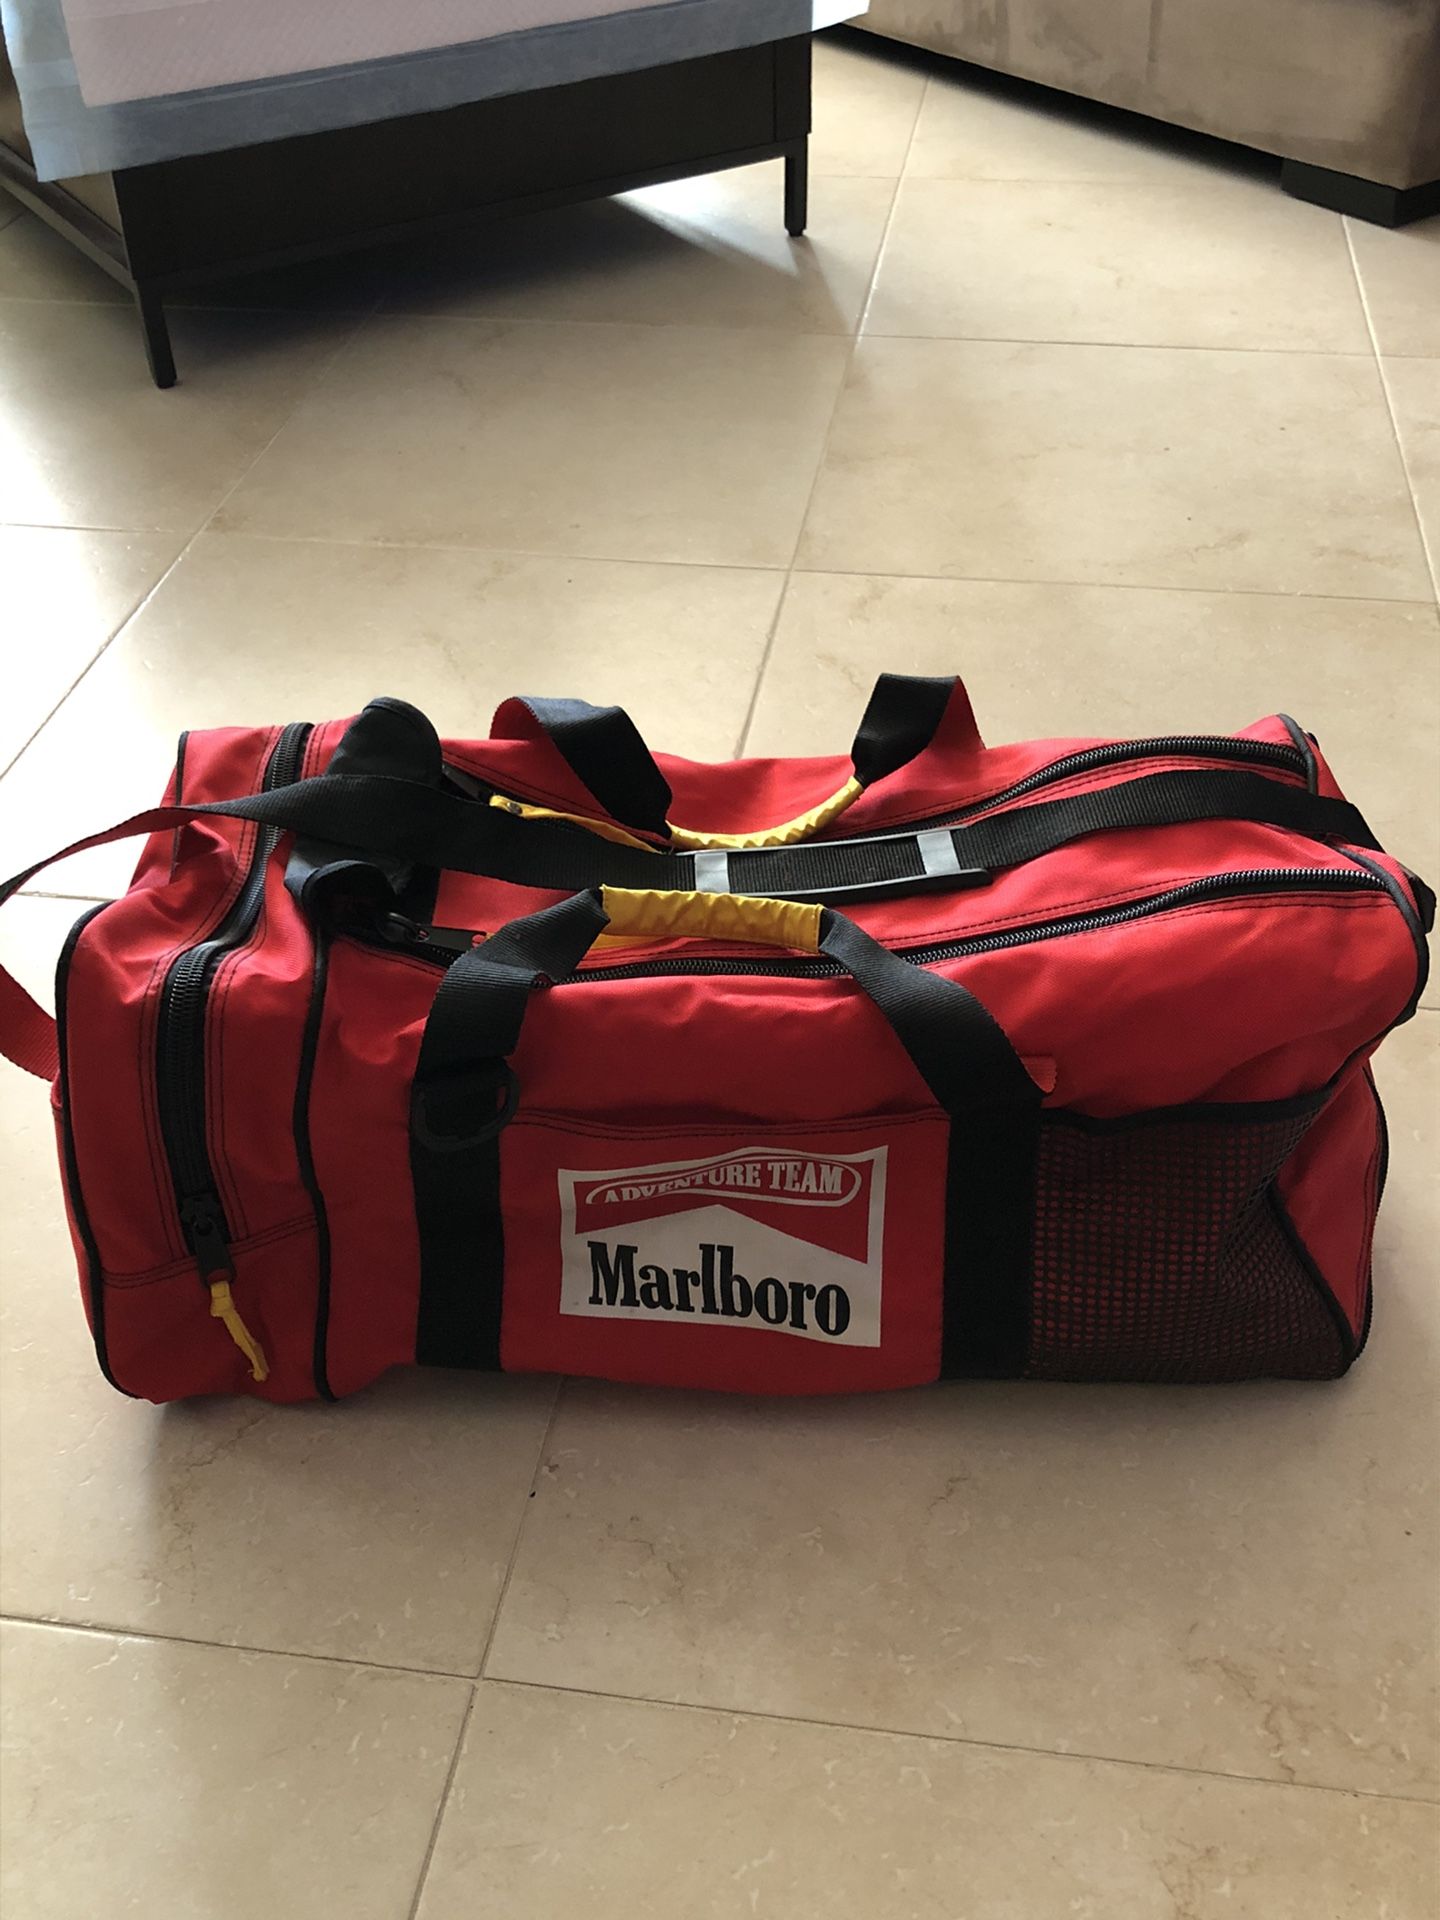 Marlboro adventure team duffle bag luggage 23”x10”x10”